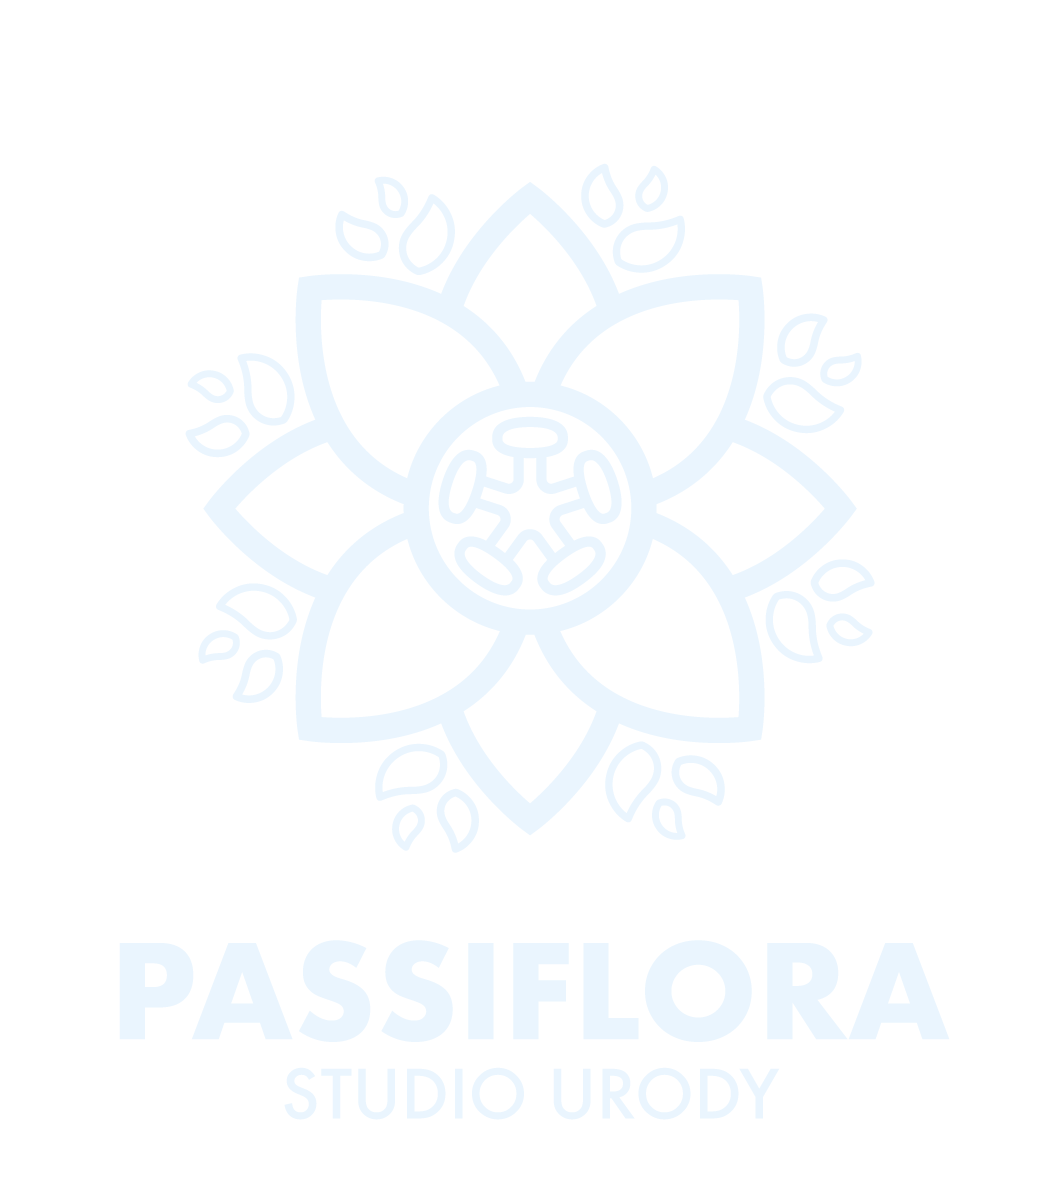 Passiflora logo